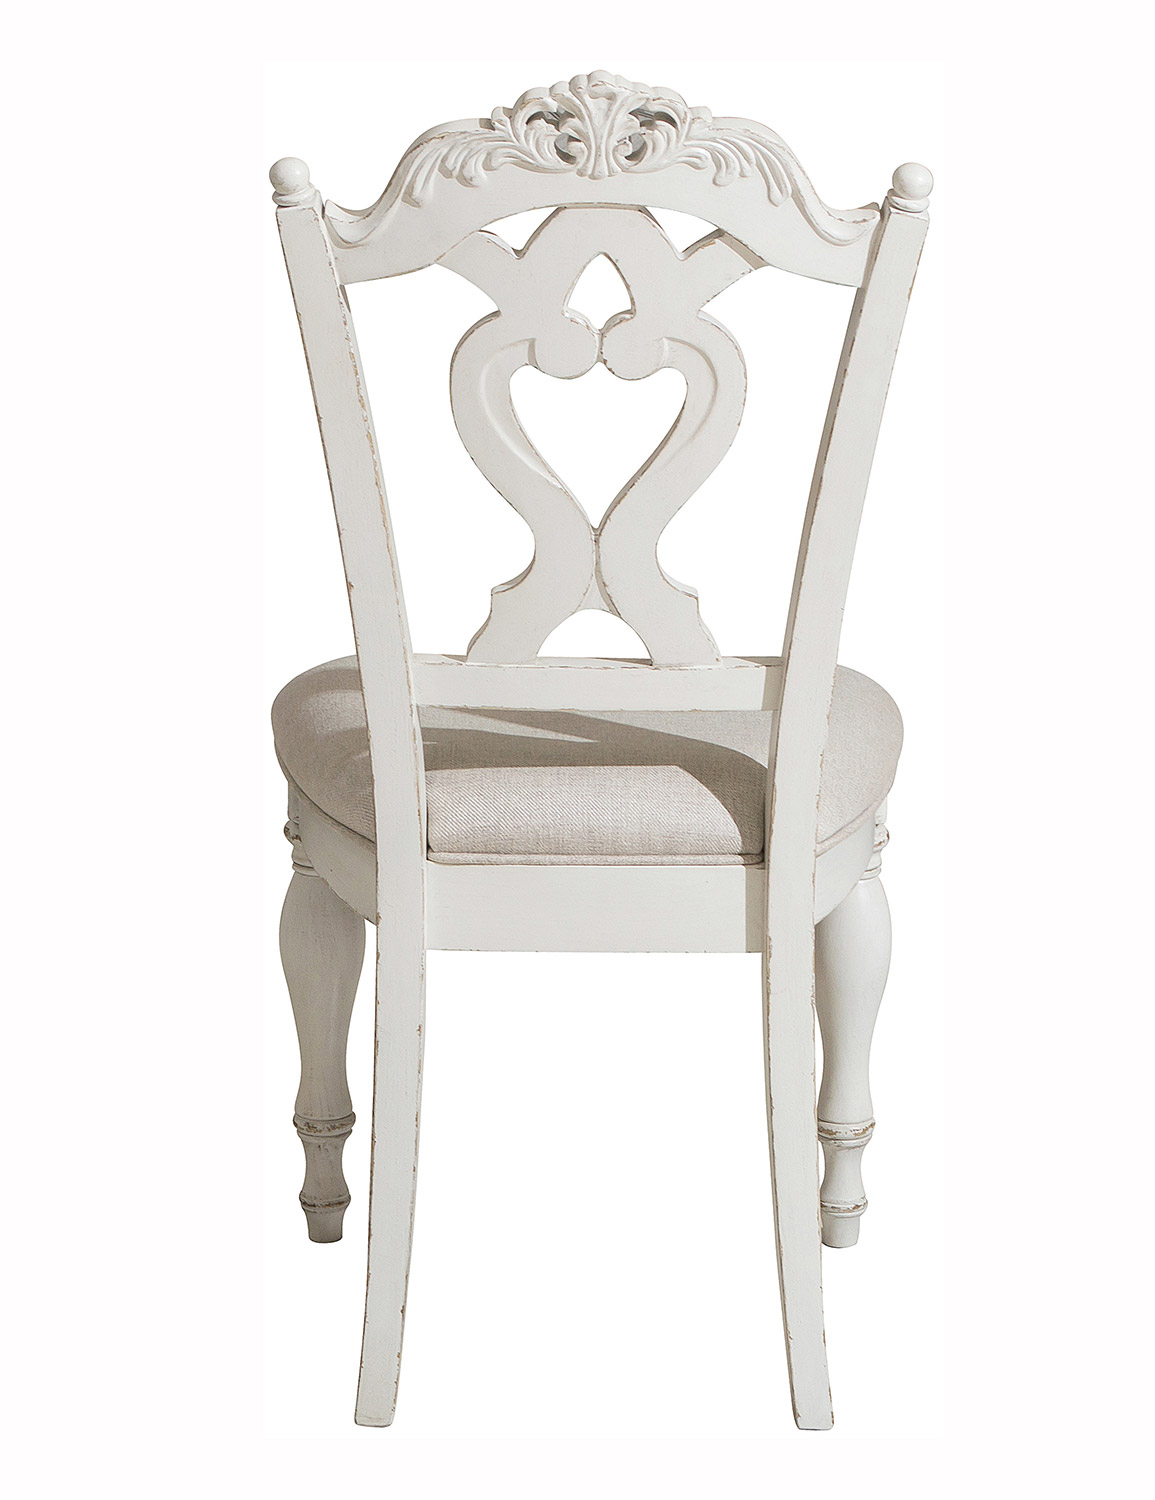 Homelegance Cinderella Desk Chair - Antique White with Gray Rub-Through